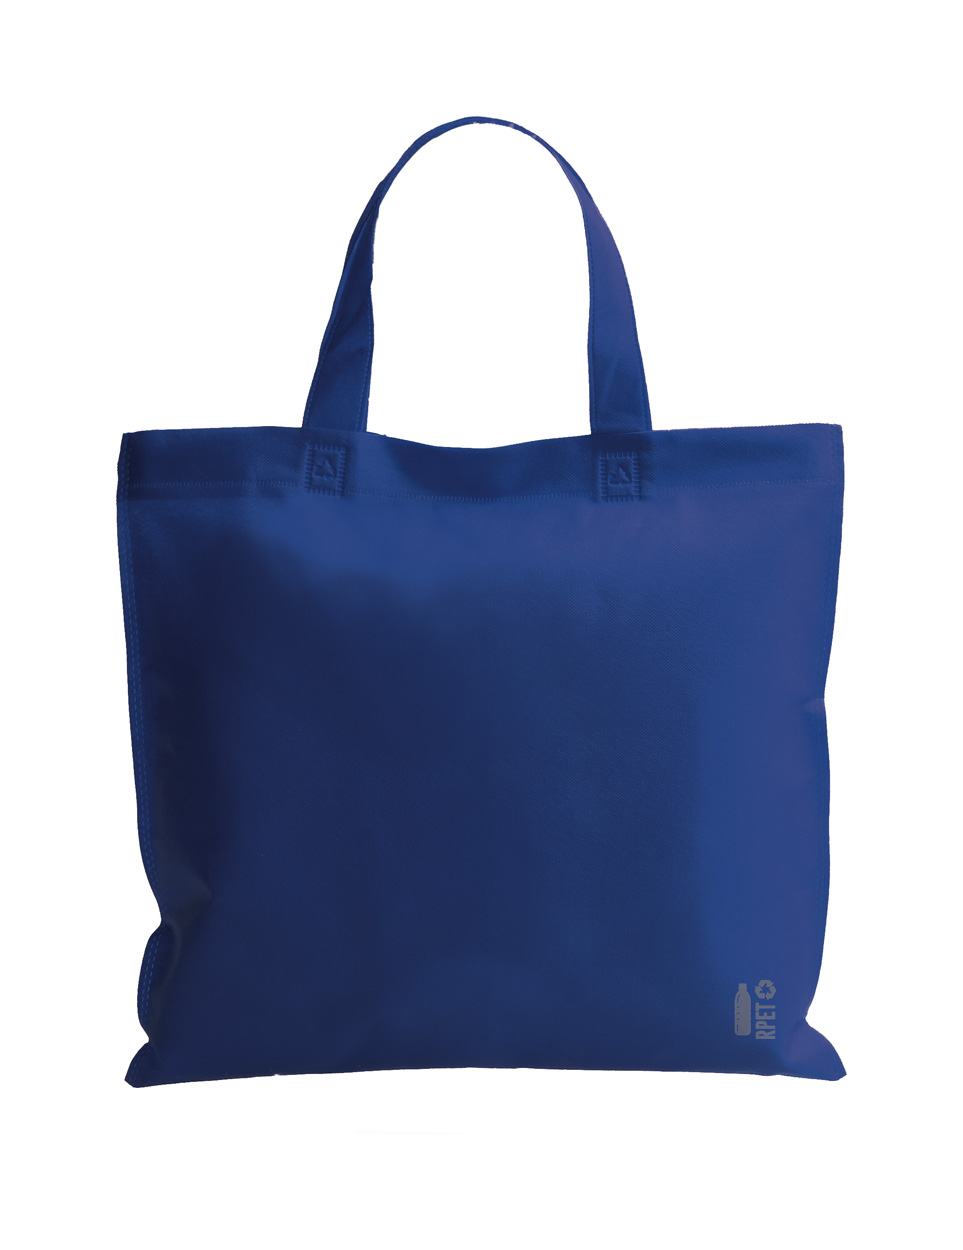 Shopping bag RADUIN in RPET material